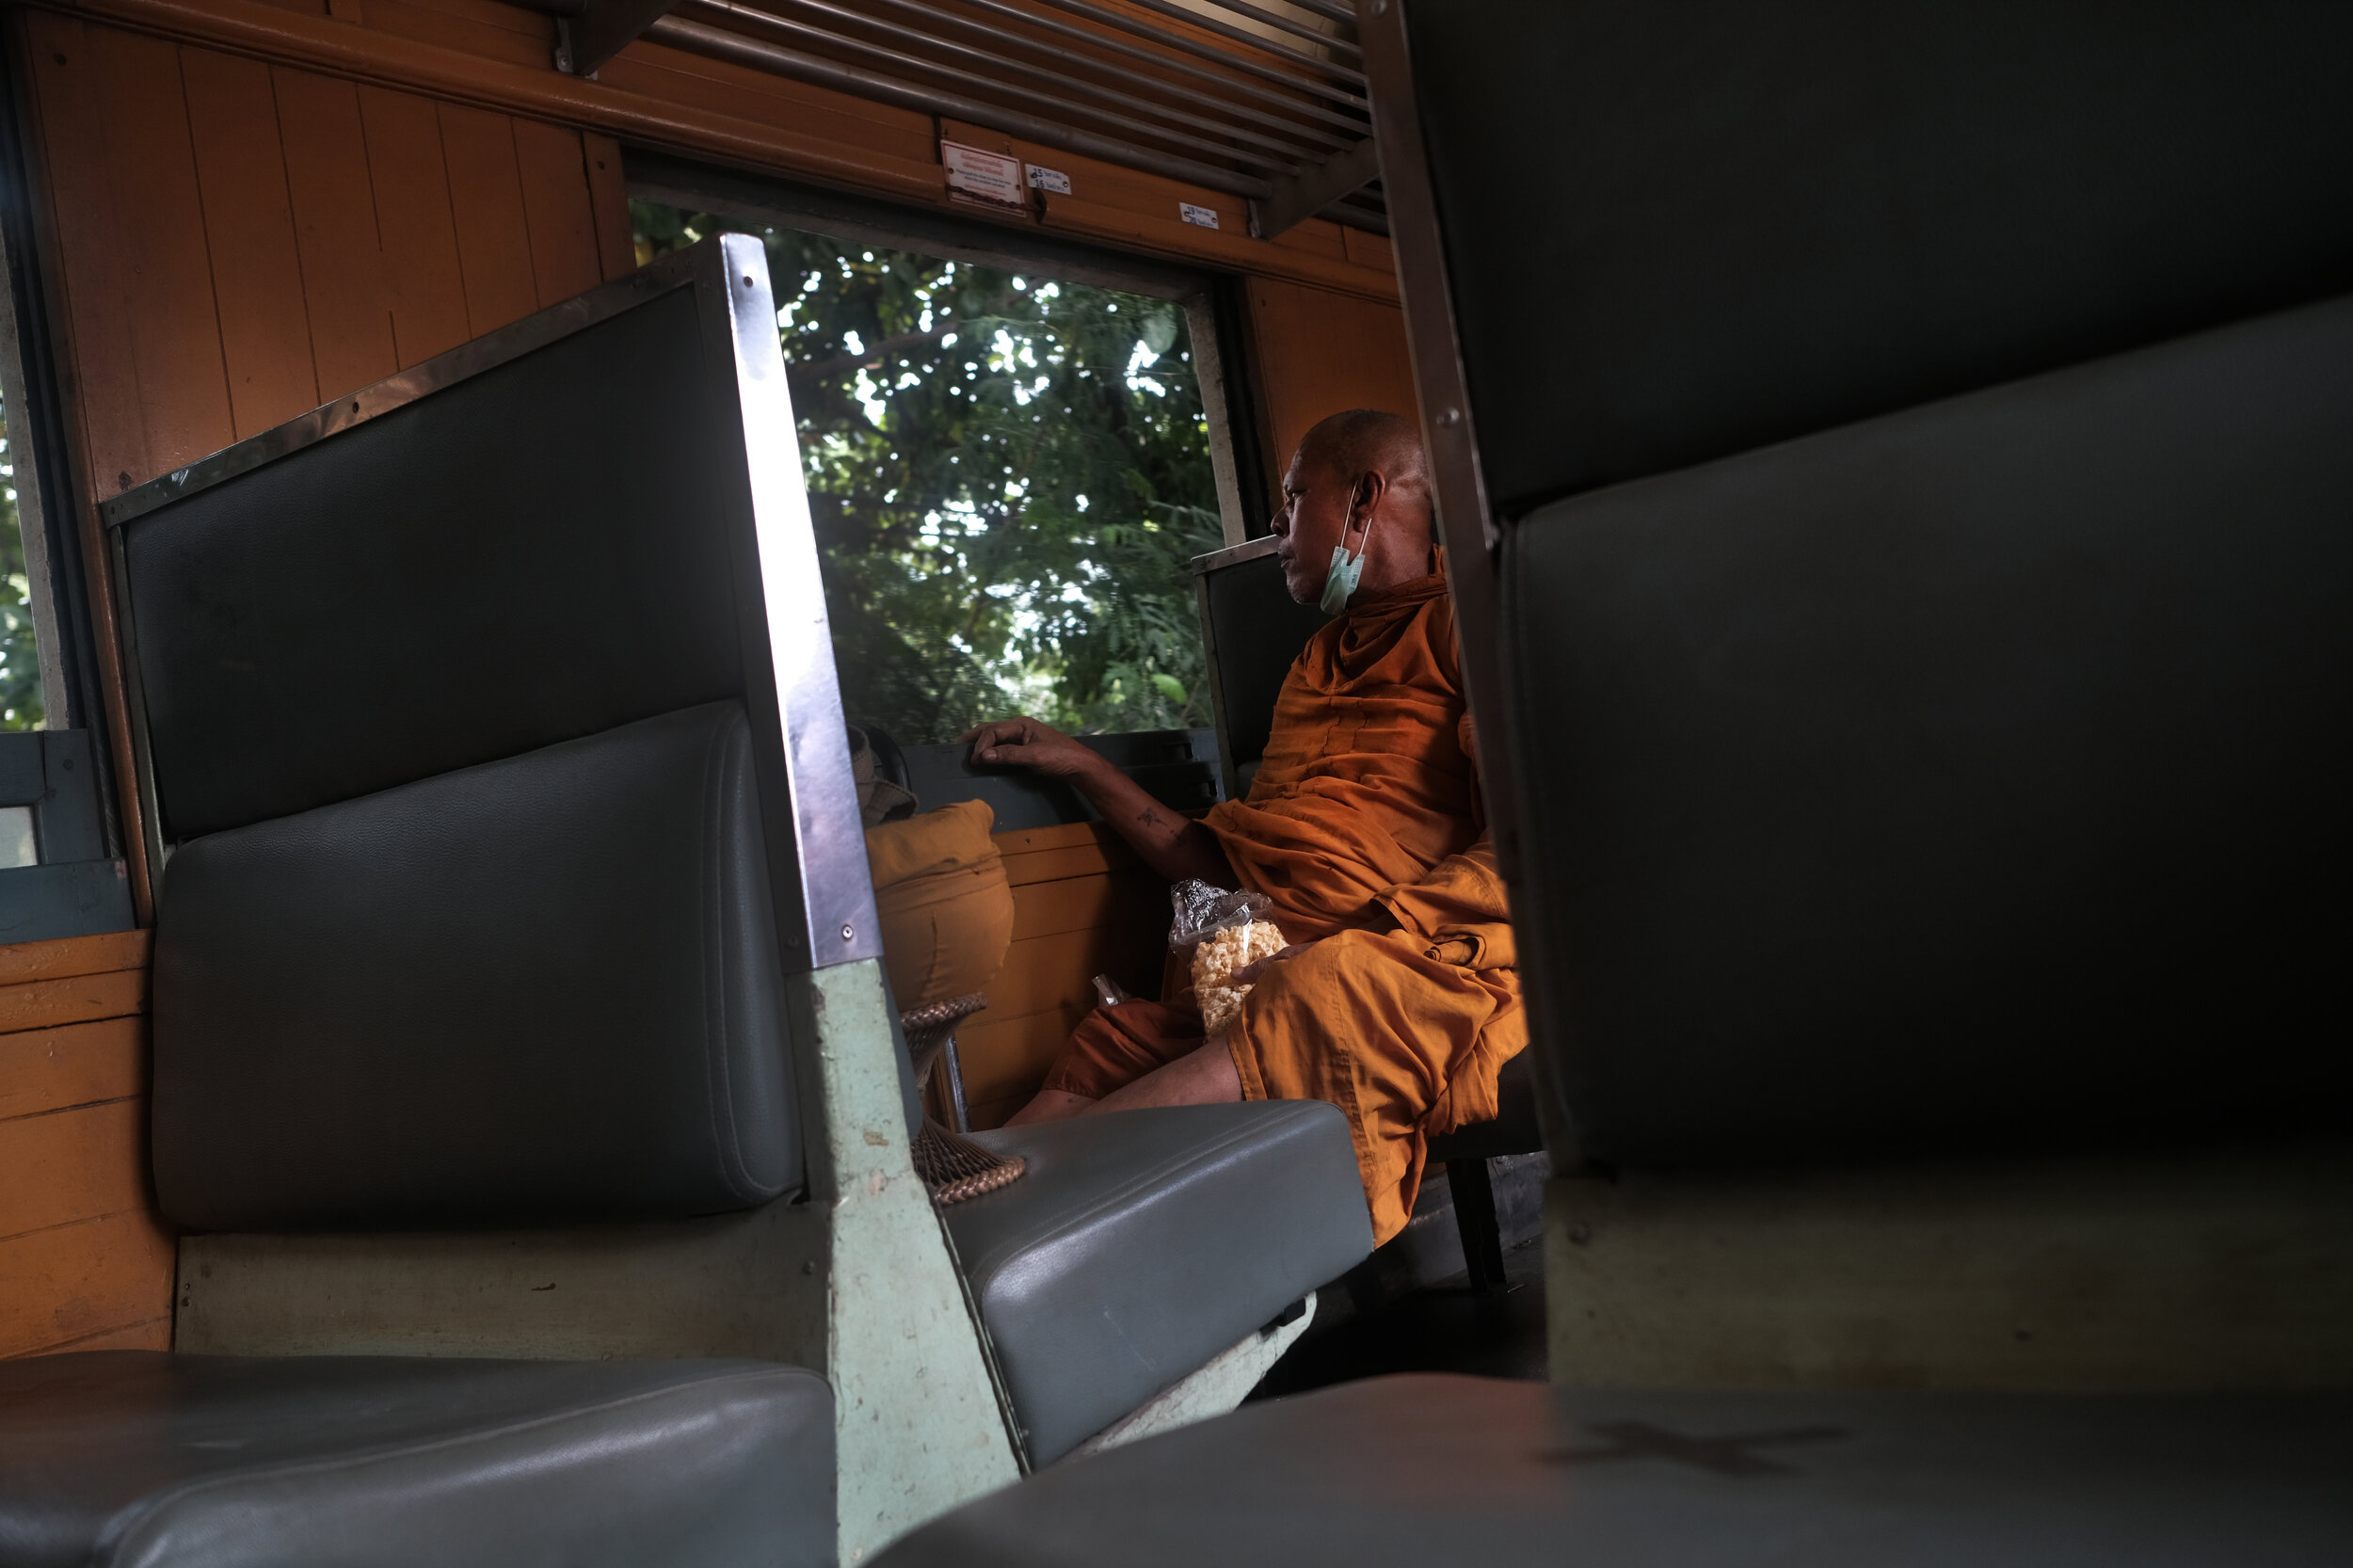  Popcorn and reflection. A Buddhist Monk making the return journey to Bangkok Thonburi Station. 